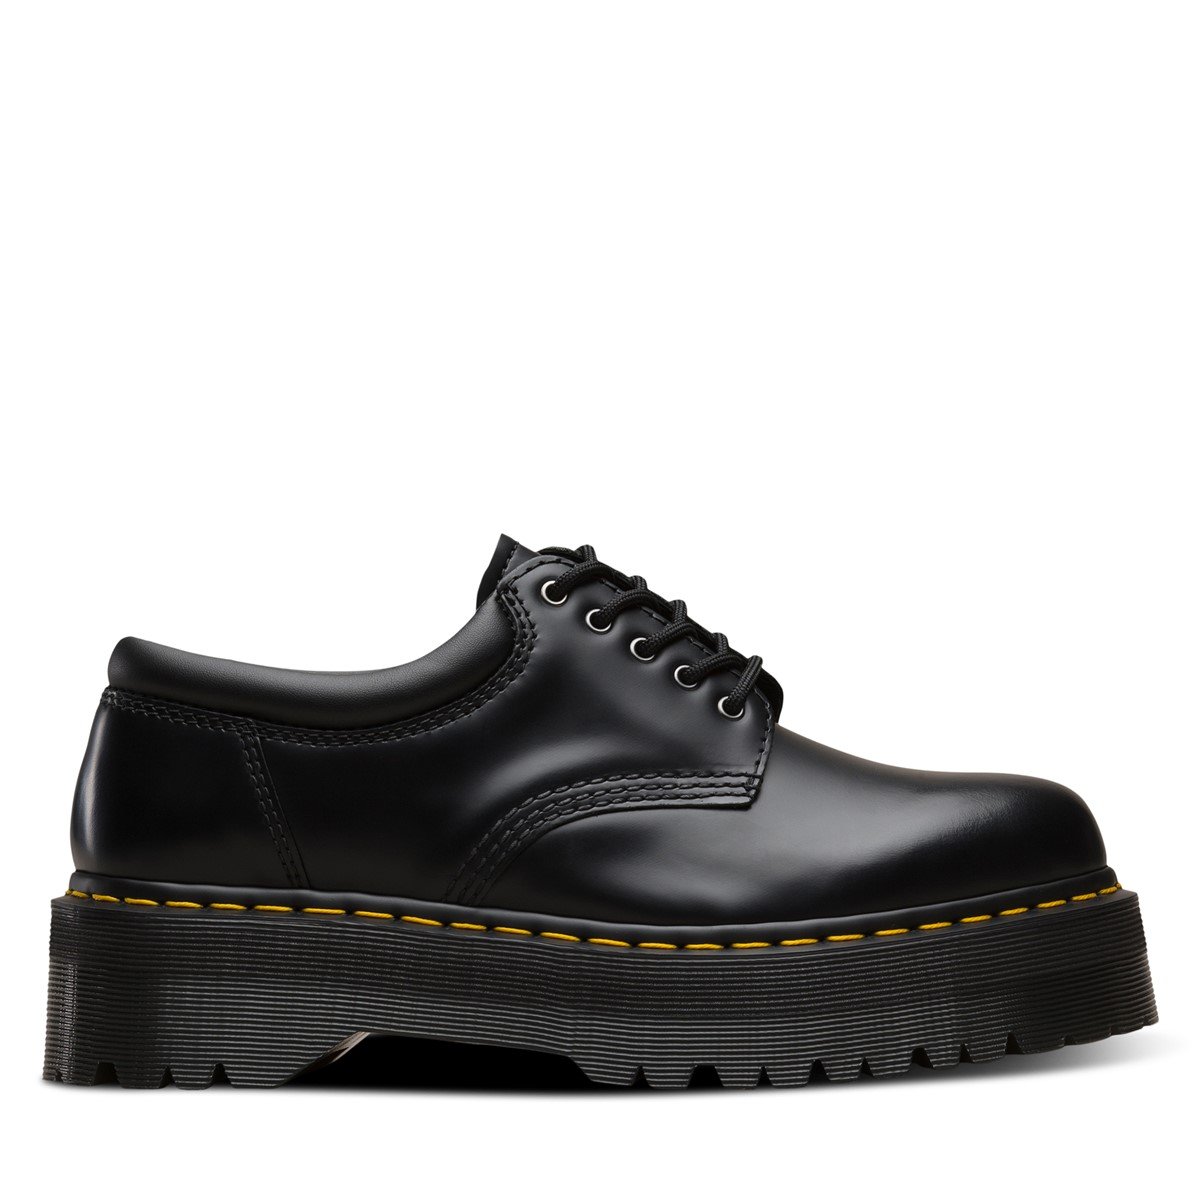 Women's 8053 Polished Smooth Platform Shoes in Black